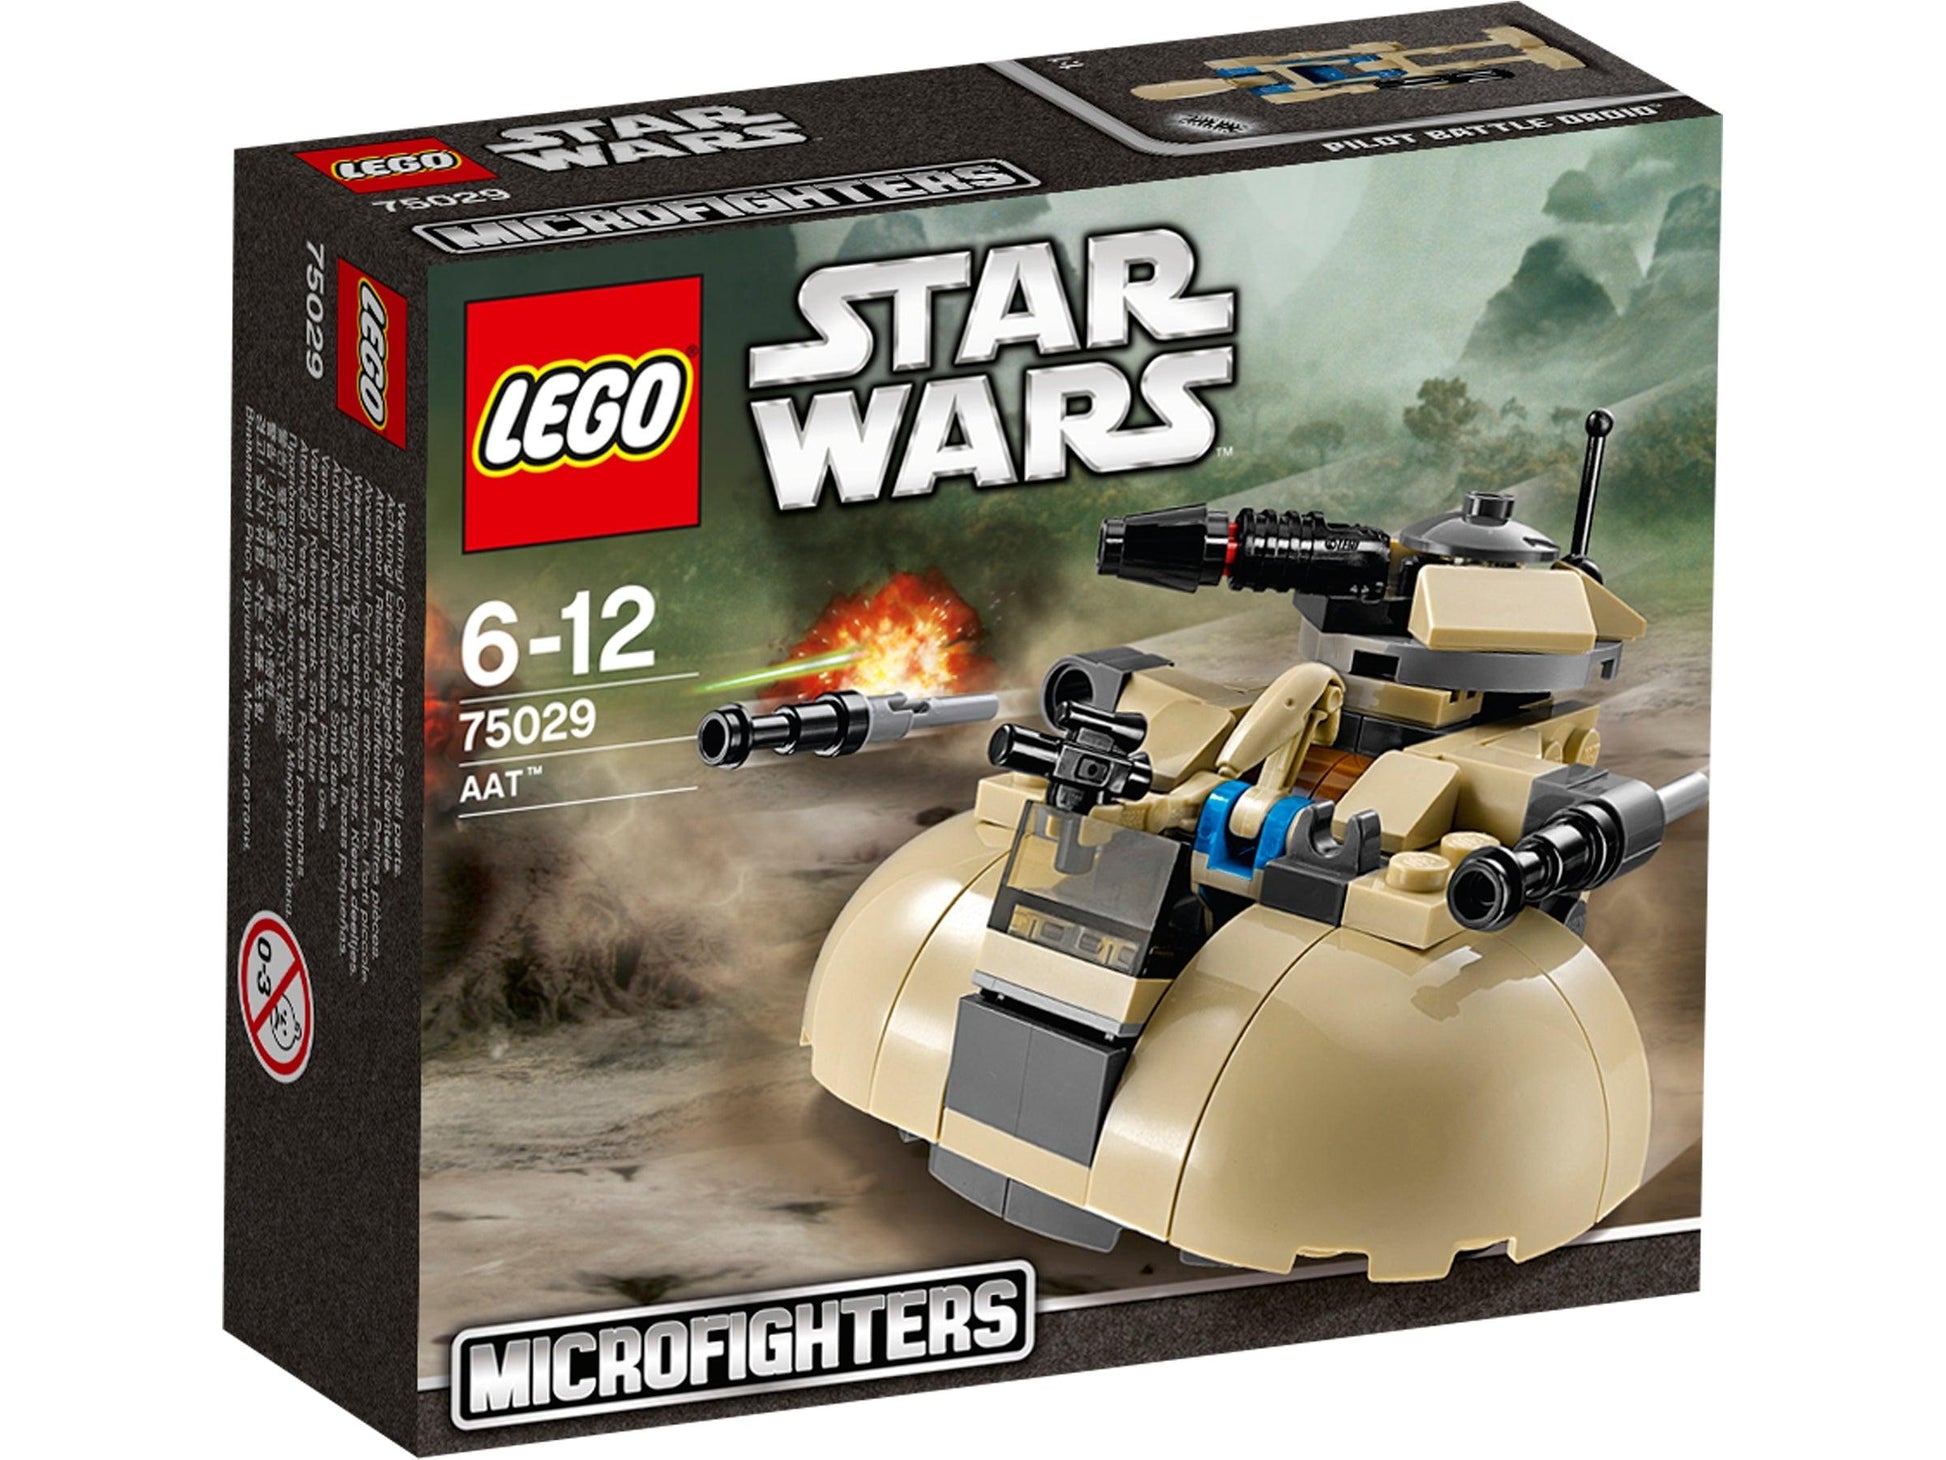 LEGO AAT Microfighter 75029 Star Wars - Microfighters LLEGO STARWARS @ 2TTOYS LEGO €. 9.99